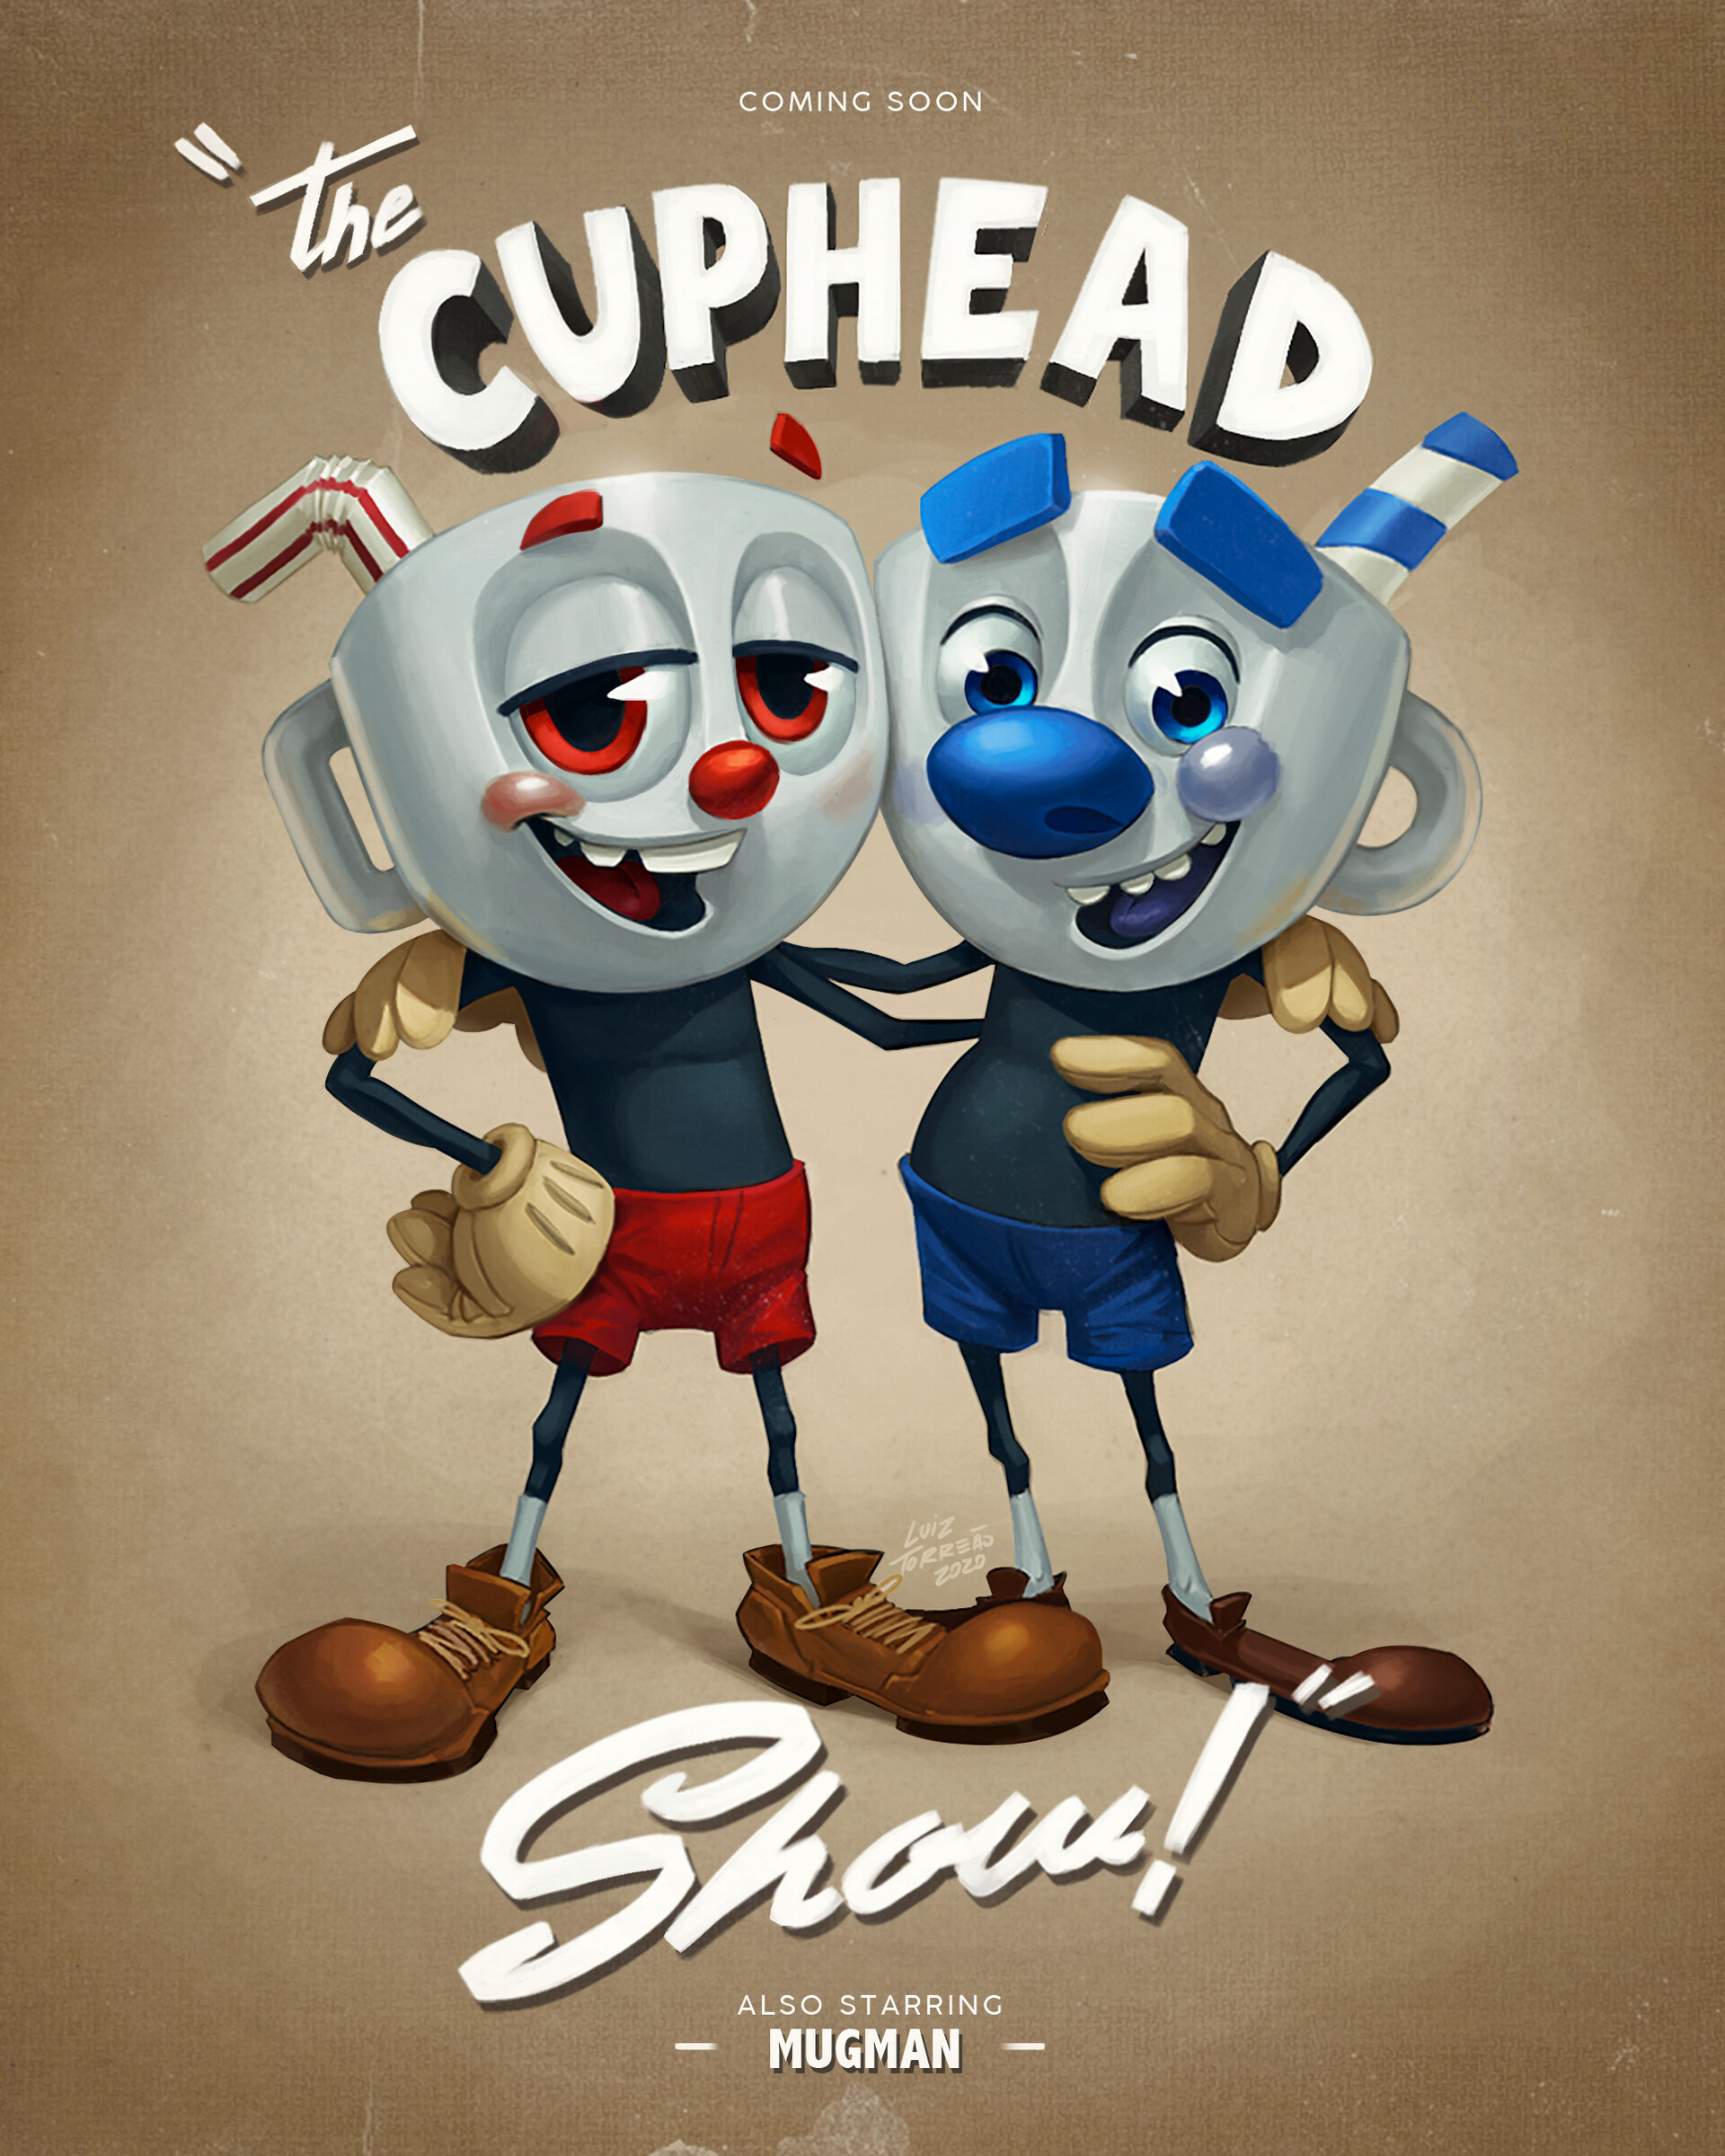 ArtStation - The Cuphead Show! fanart